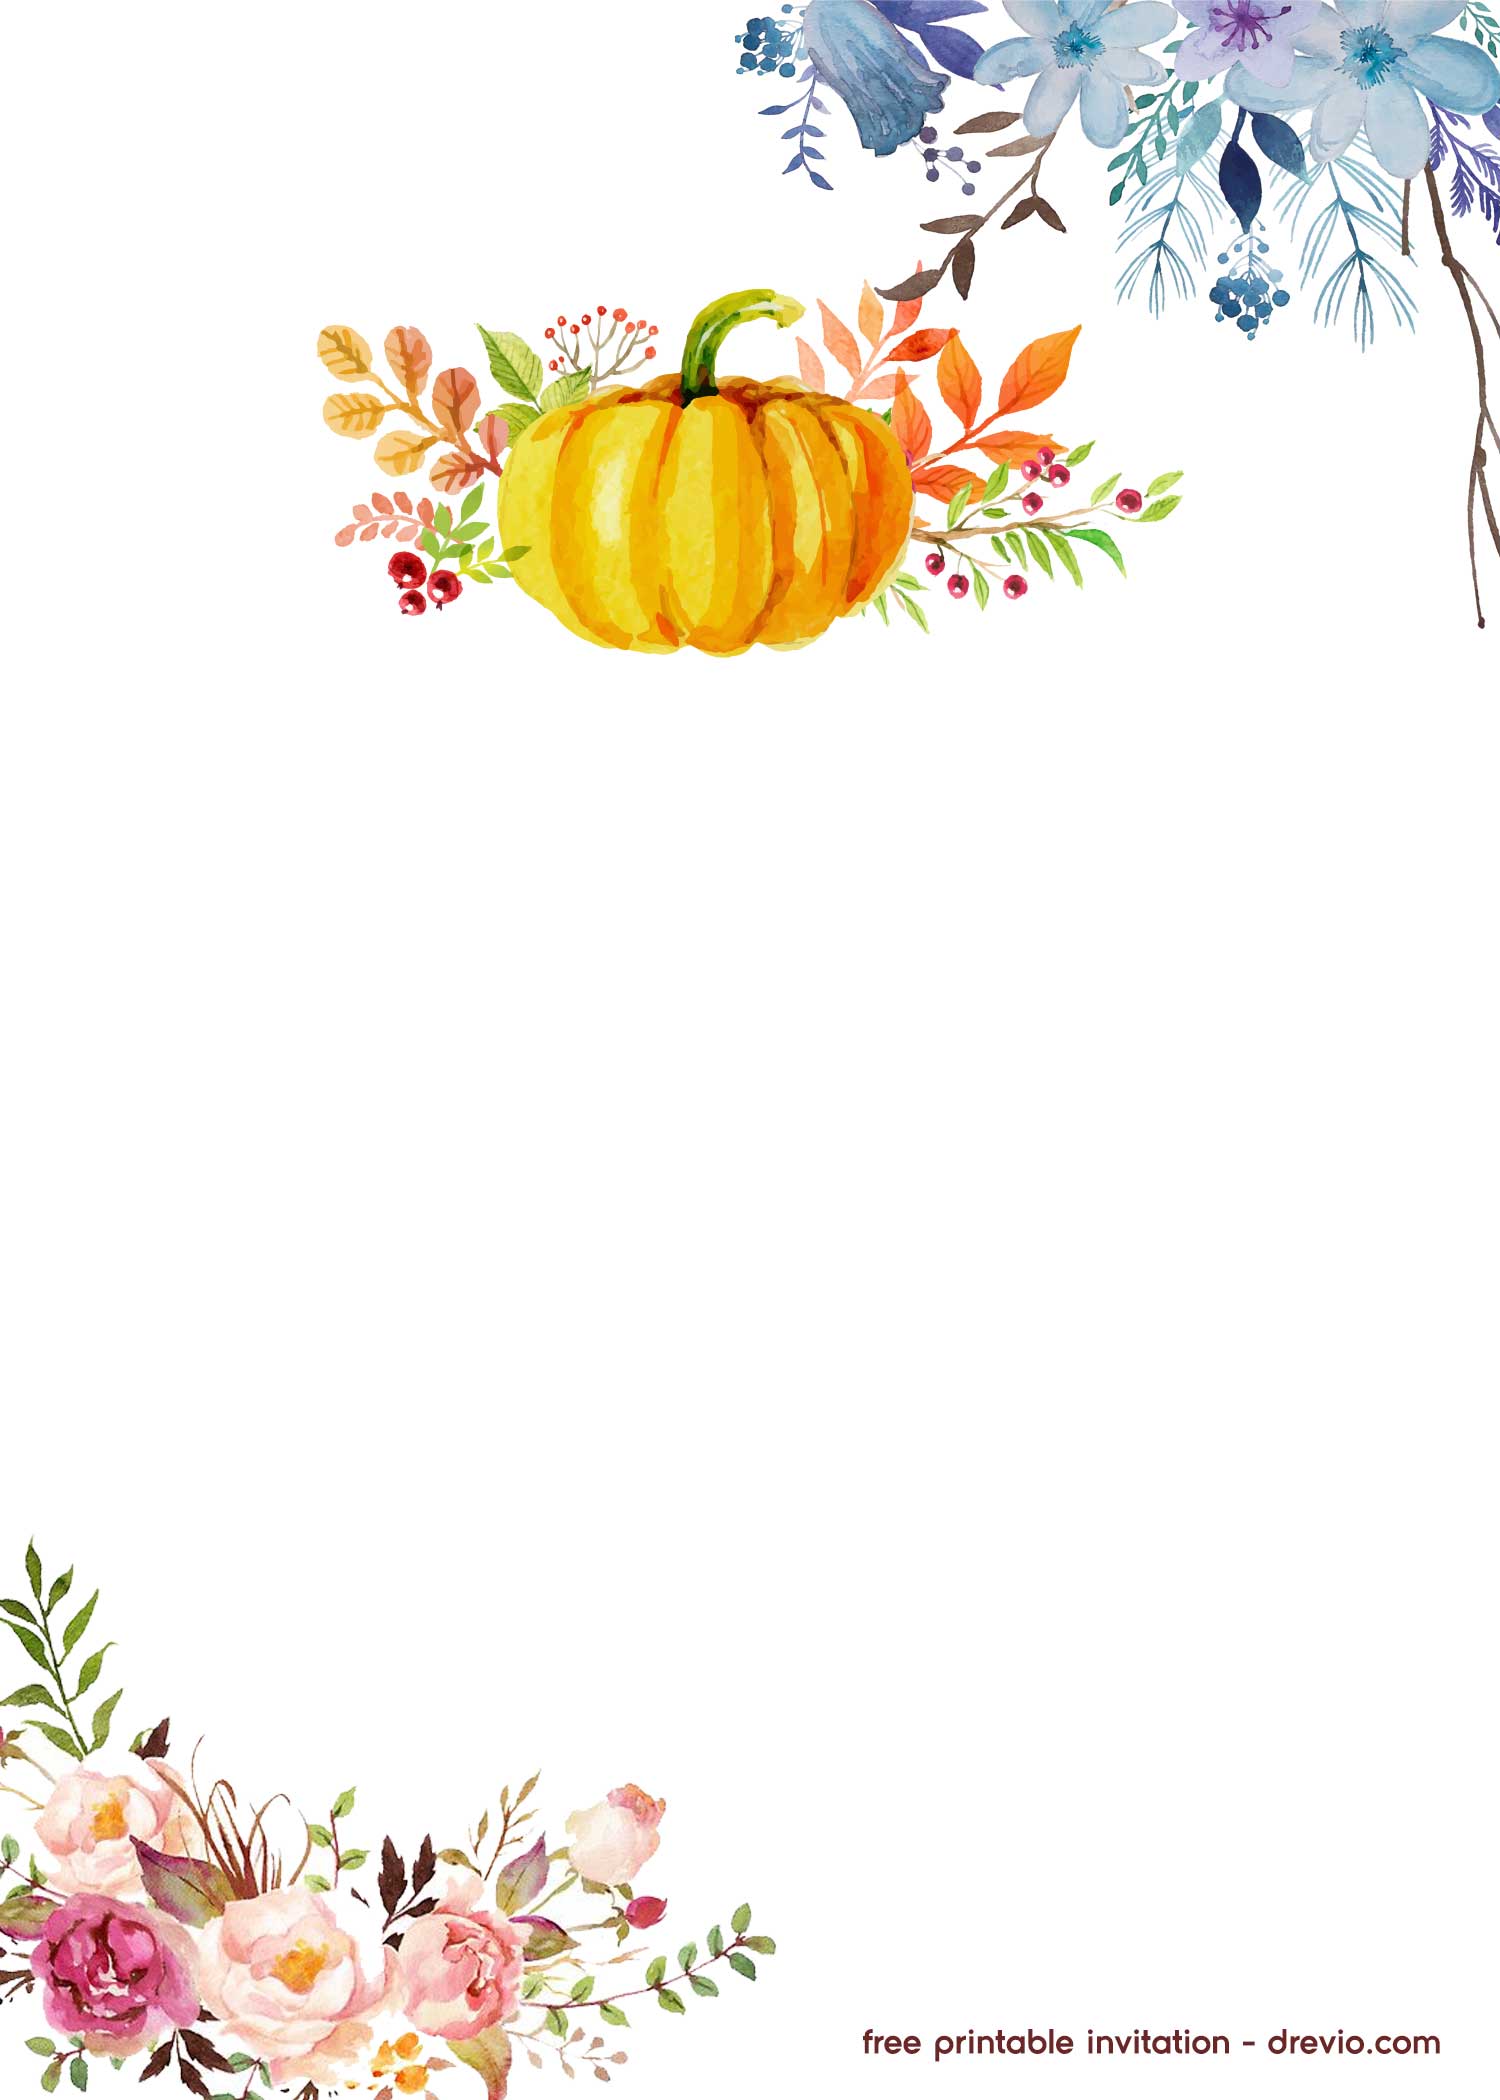 FREE Printable Pumpkin Birthday Invitation Template Download Hundreds